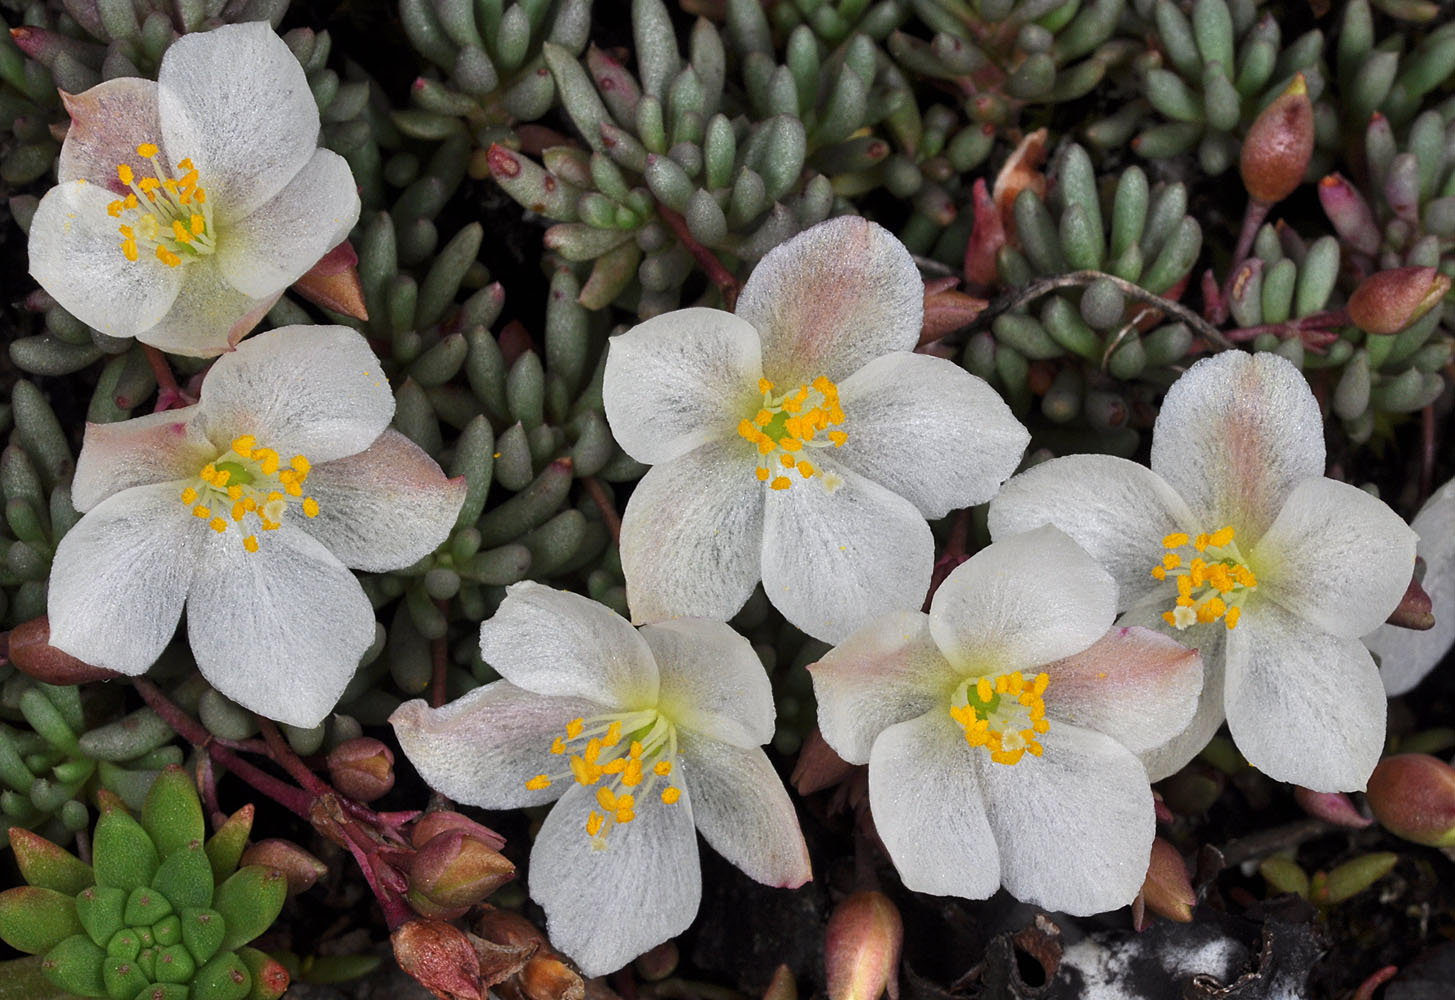 Flora of Eastern Washington Image: Phemeranthus sediformis